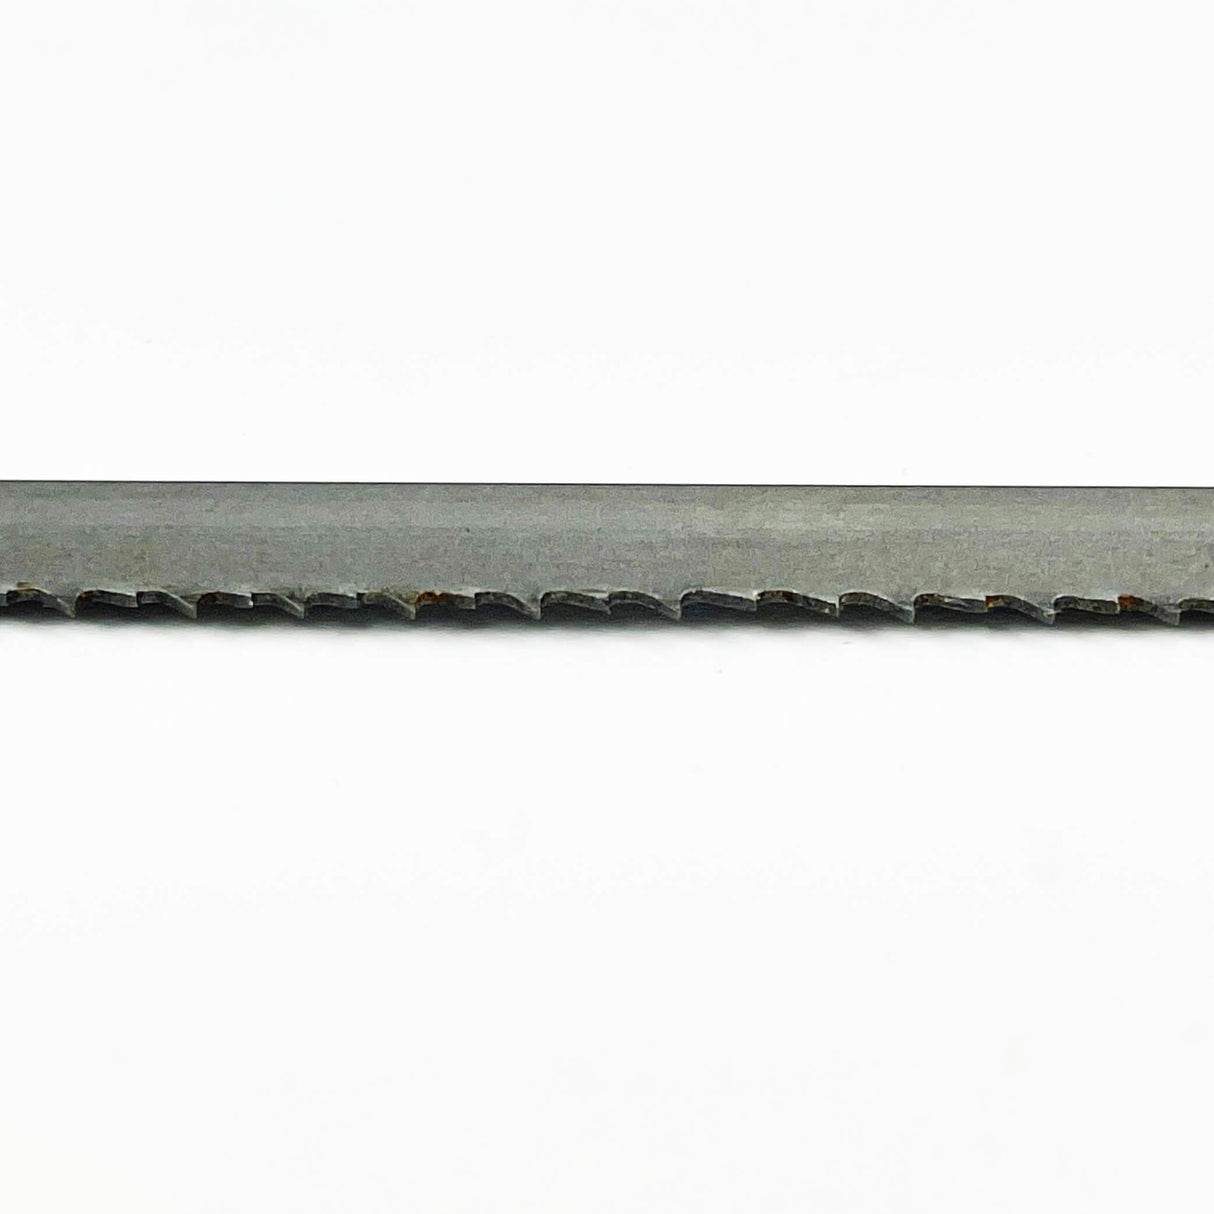 1572mm Long x 13mm Wide COBALT M42 Bi-Metal Band Saw - Pack of 2 Blades